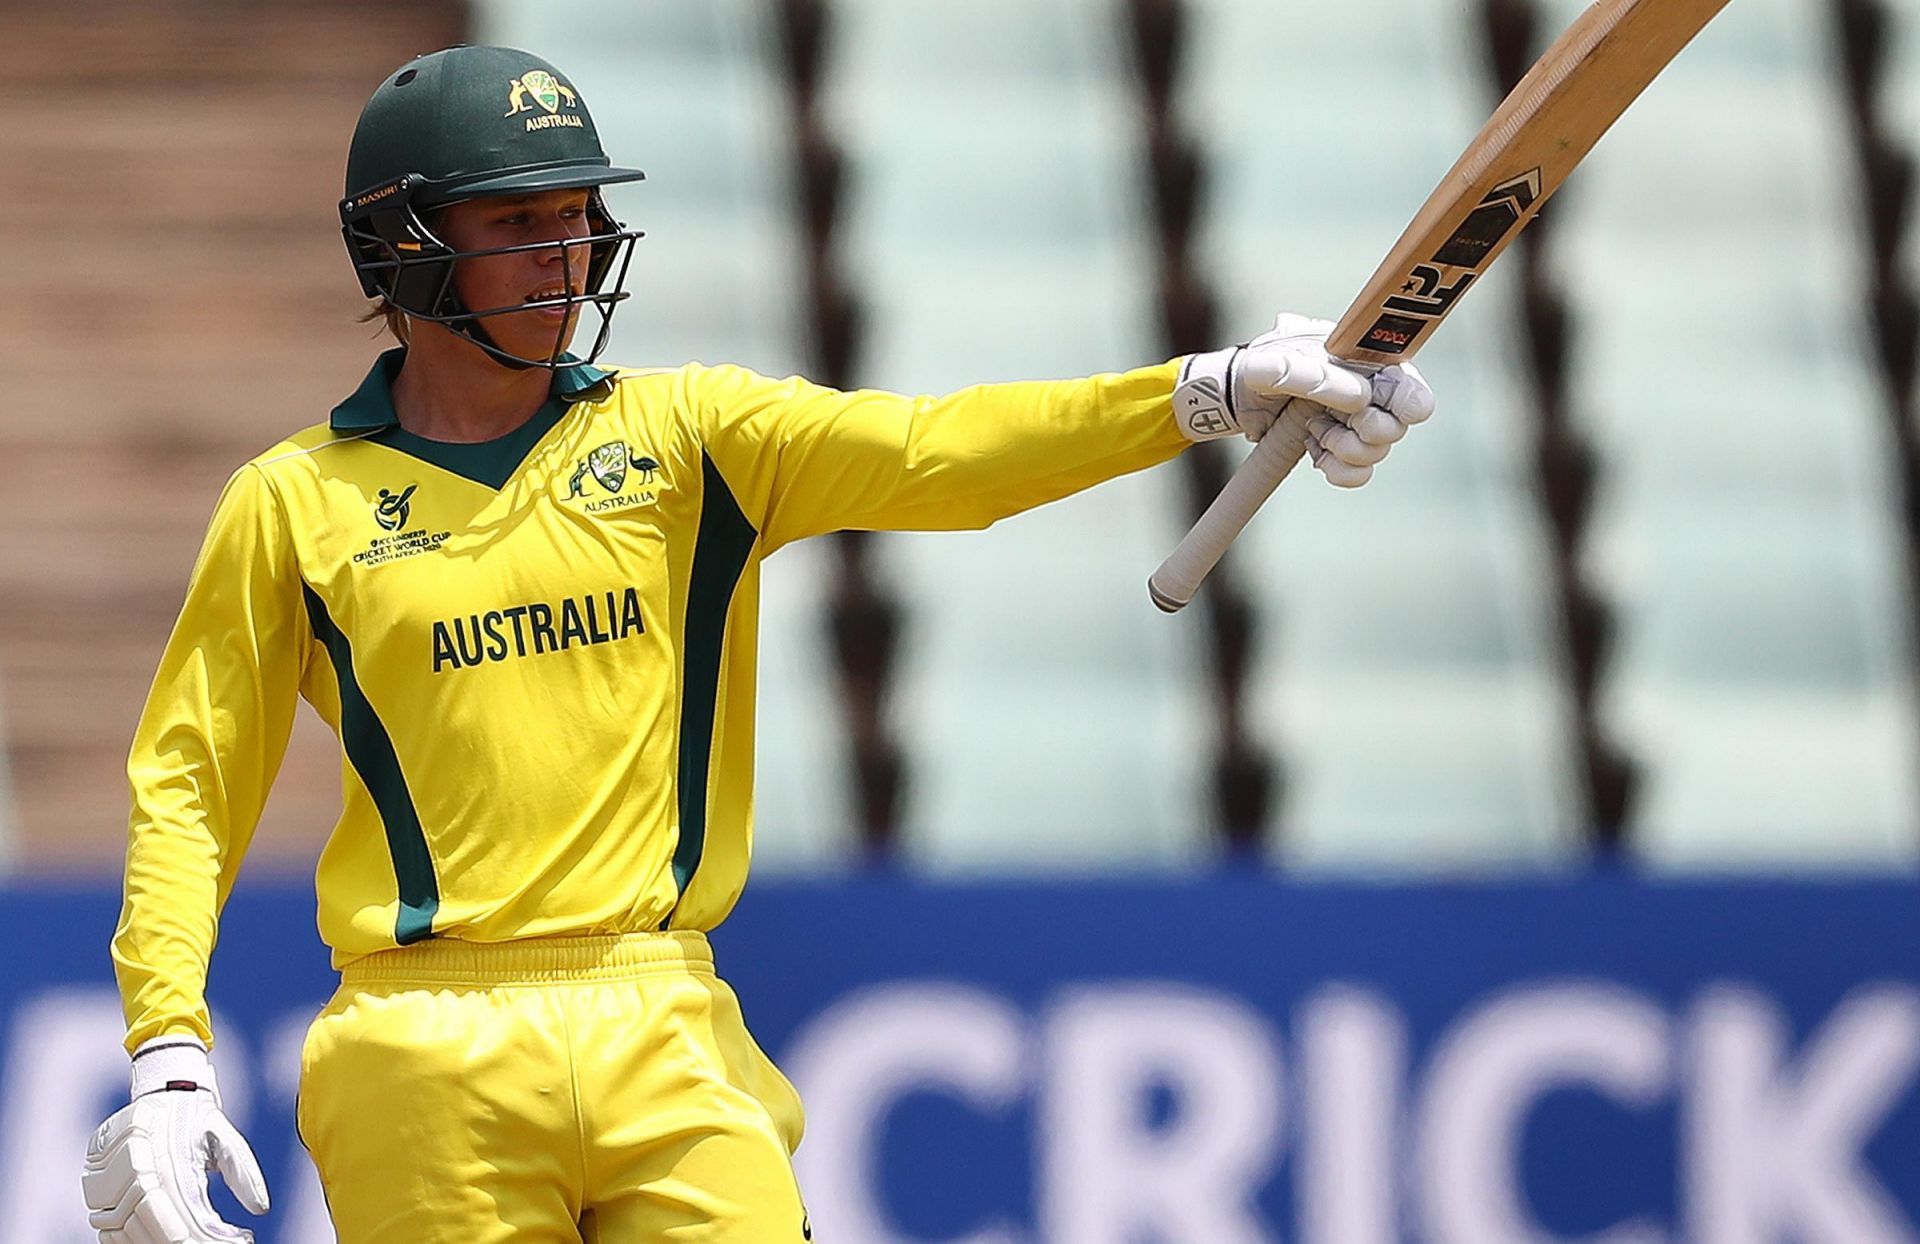 Cooper Connolly leads Australia in the U19 World Cup (Image Courtesy: Cricket Australia)